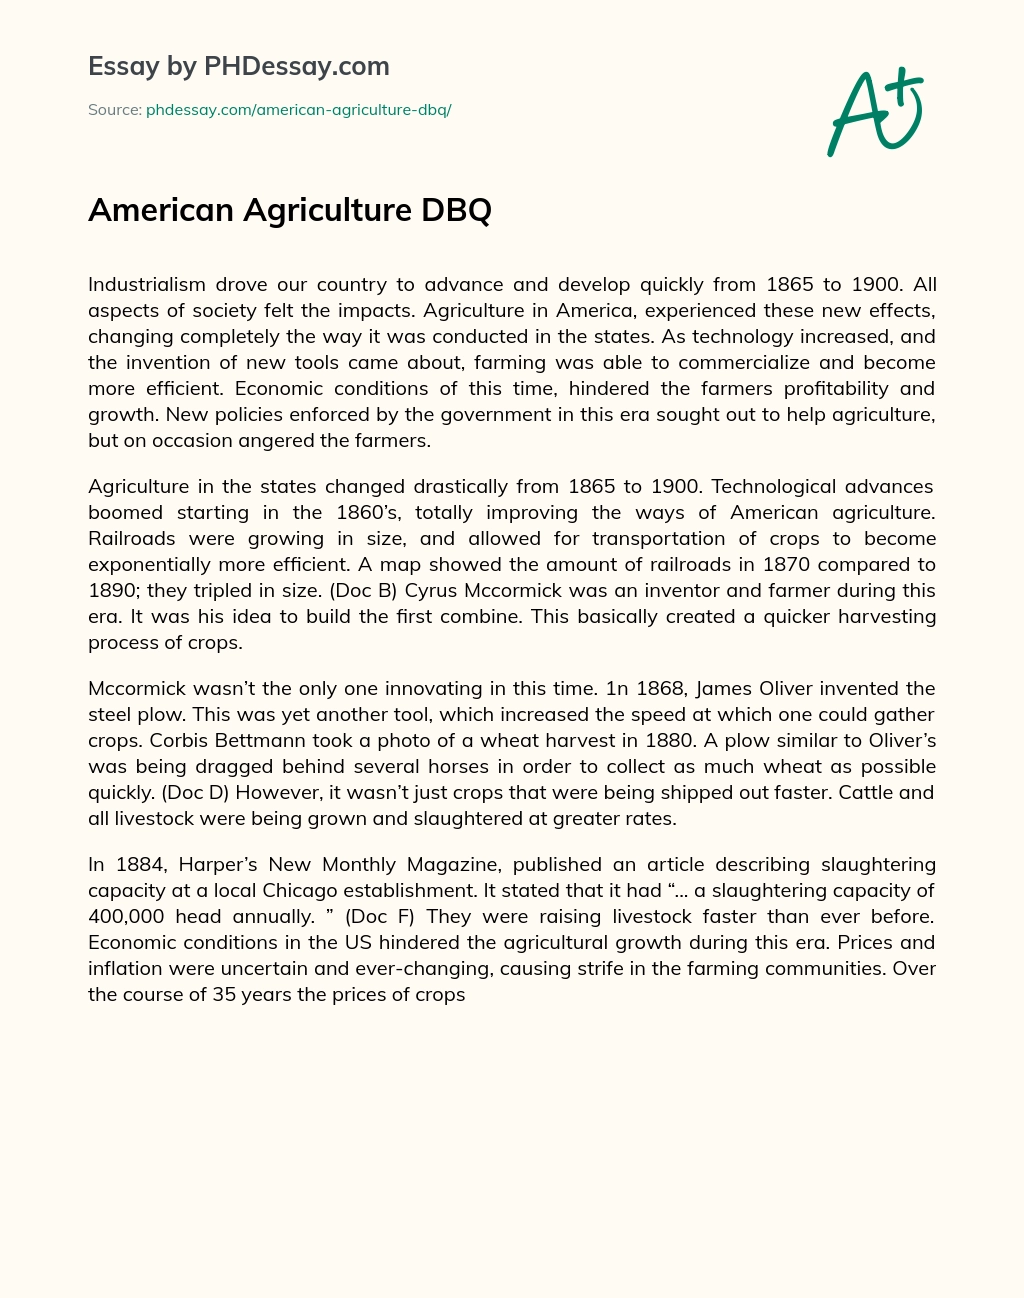 American Agriculture DBQ essay